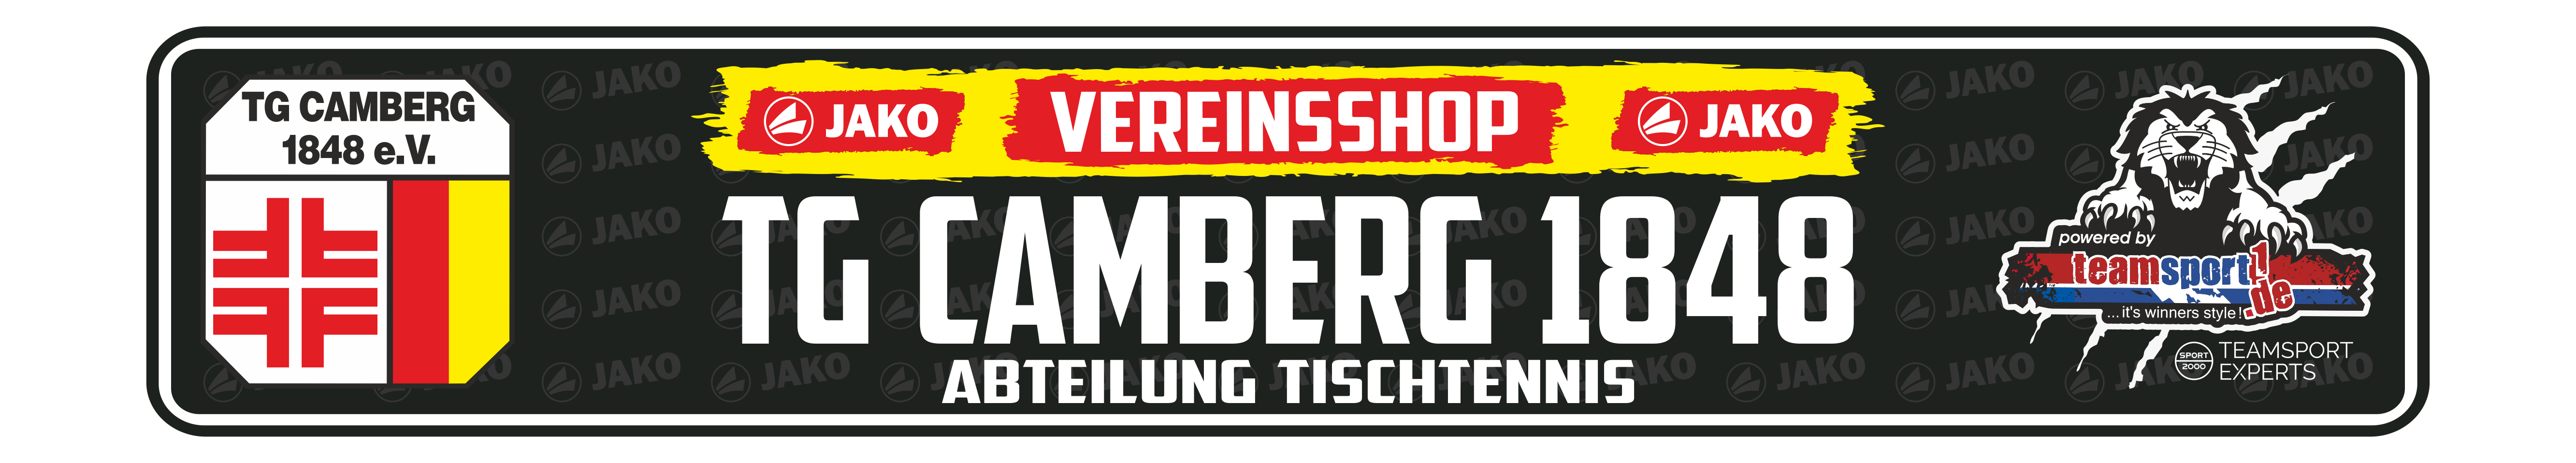 TG Camberg Tischtennis Title Image